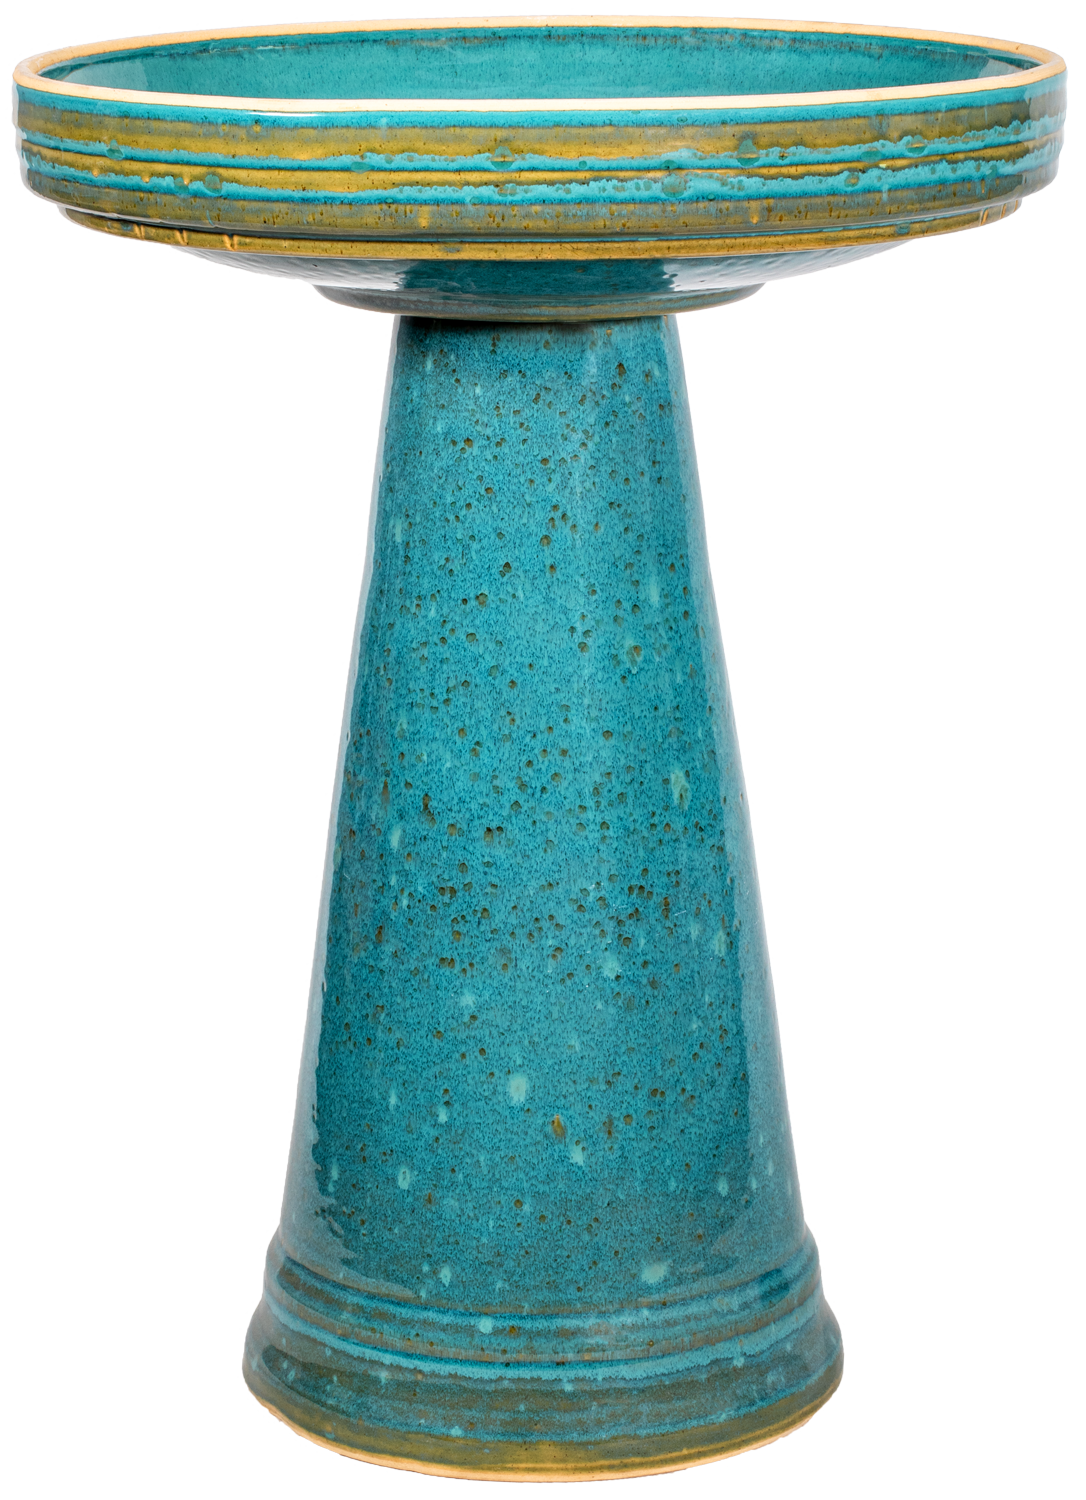 ceramic turquoise birdbath with simple modern smooth design